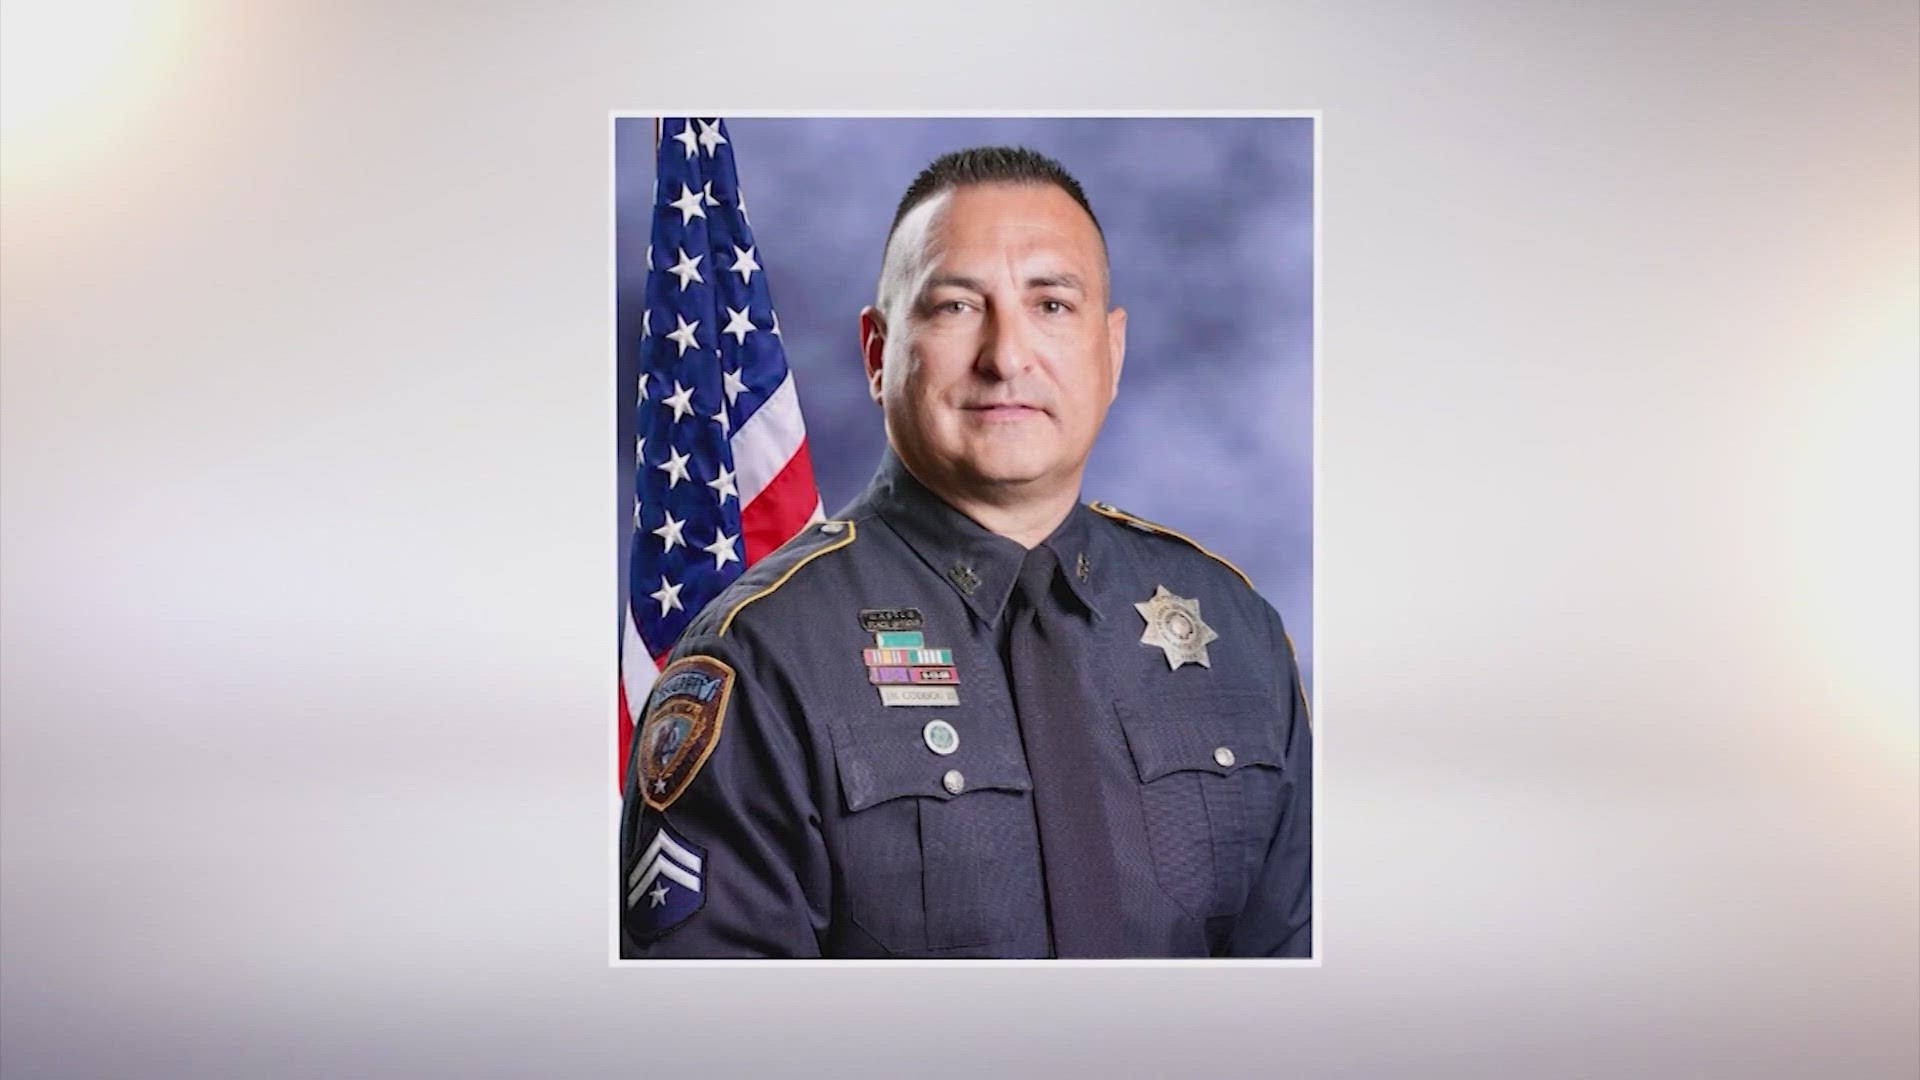 Deputy Investigator John Hampton Coddou, 50, was helping with a crash when he was hit by a truck, Sheriff Ed Gonzalez said.